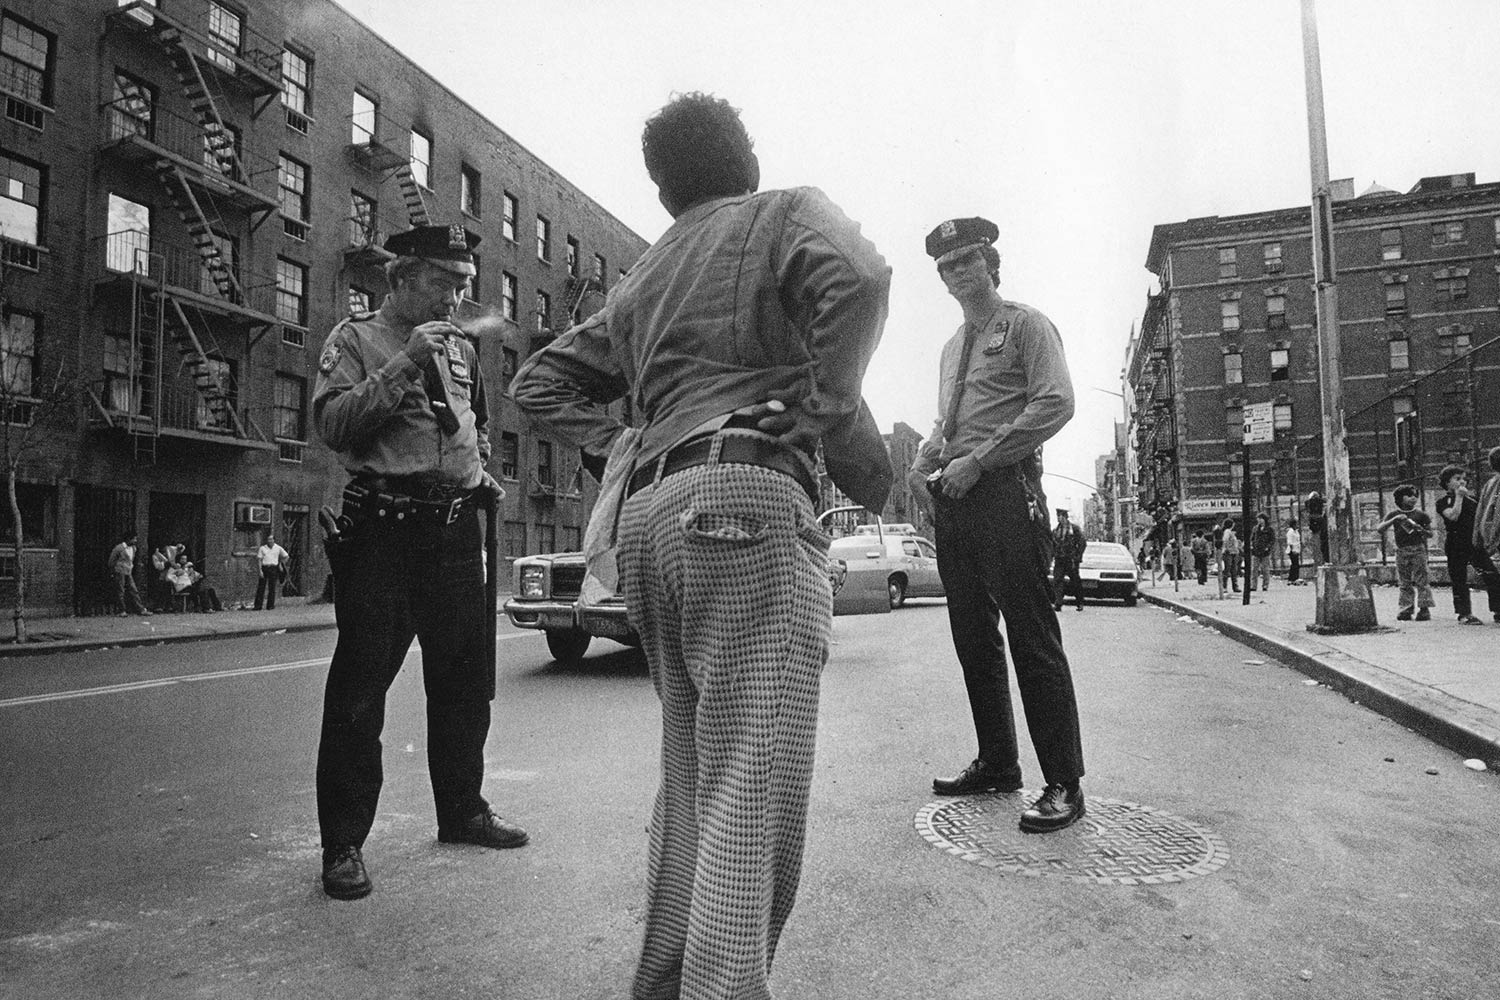 Police restraint, 1979